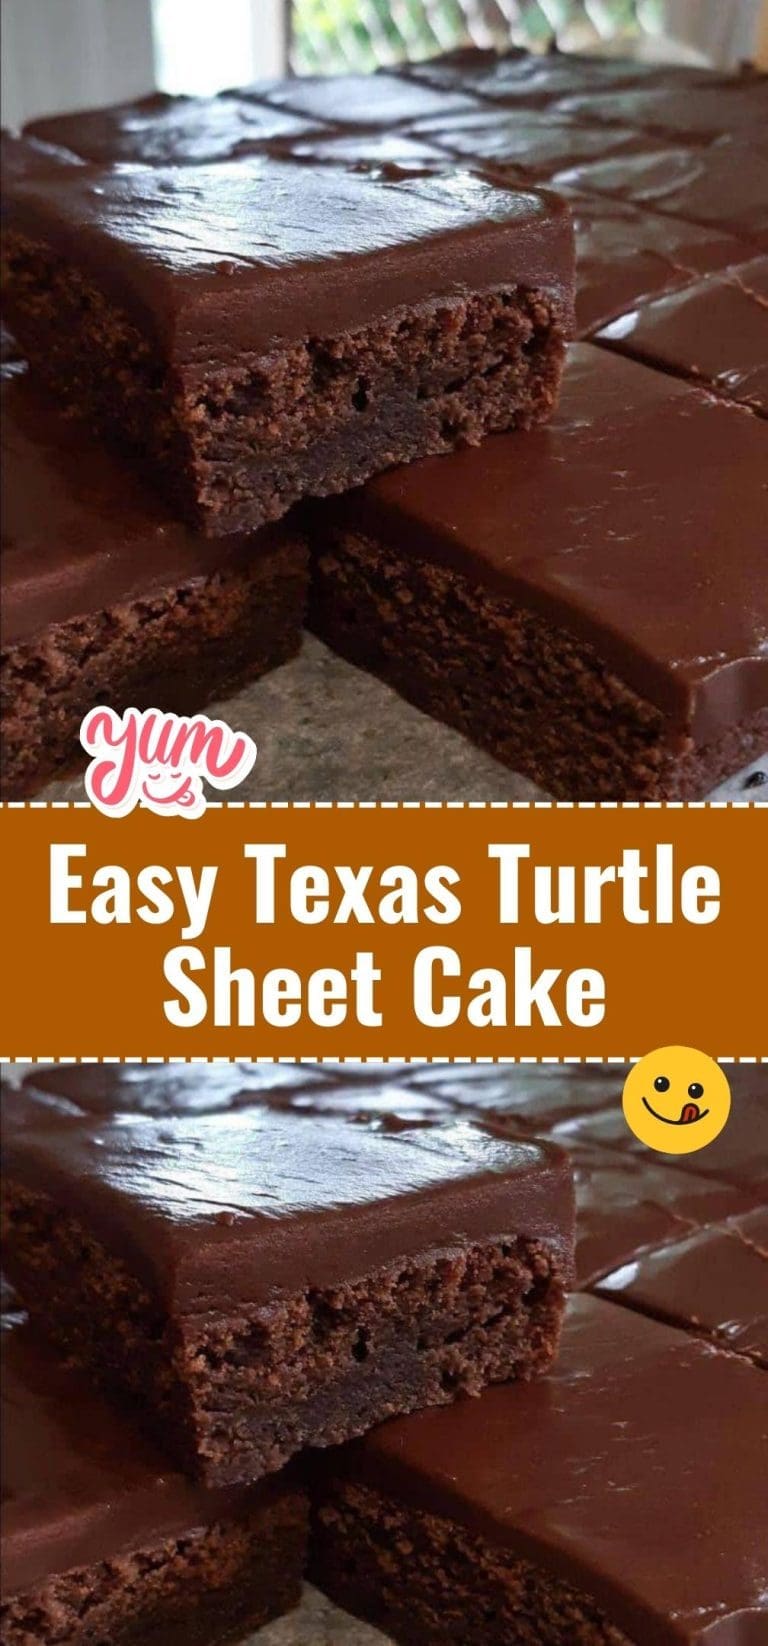 Easy Texas Turtle Sheet Cake